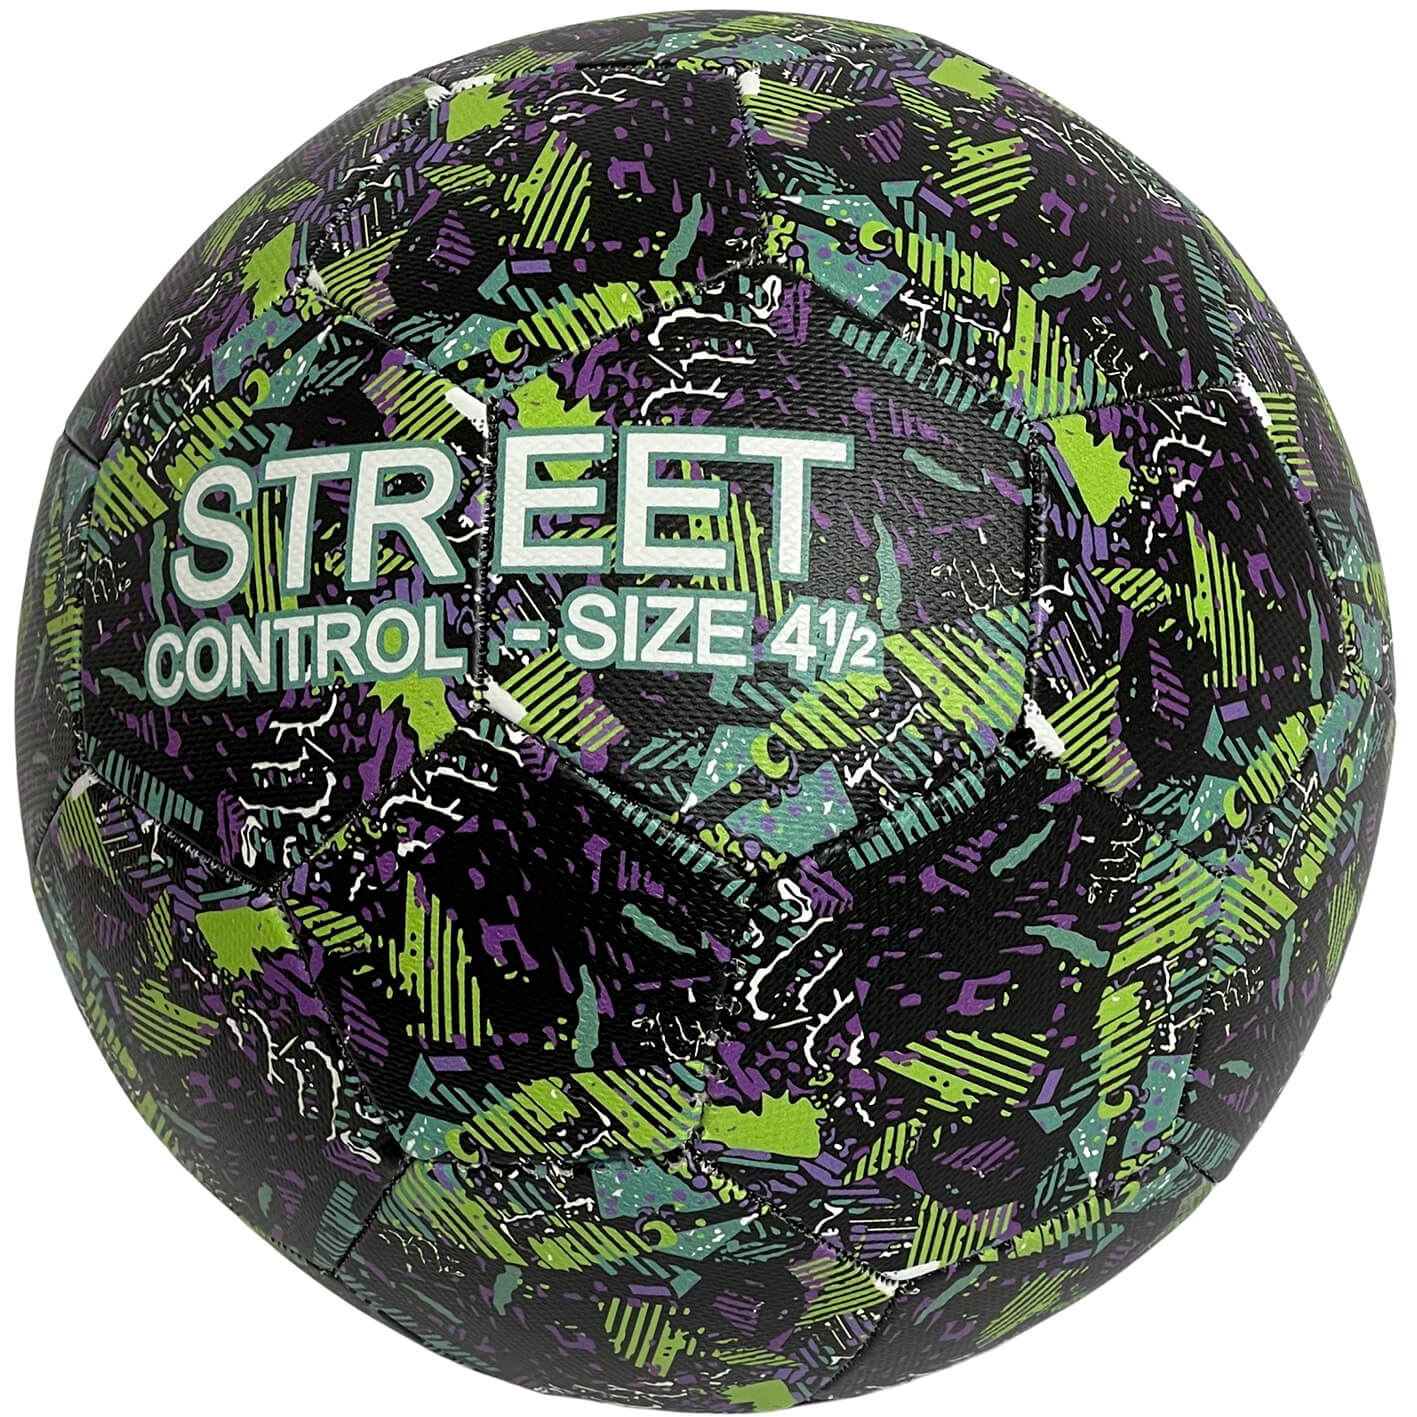 Midas Street Control fodbold